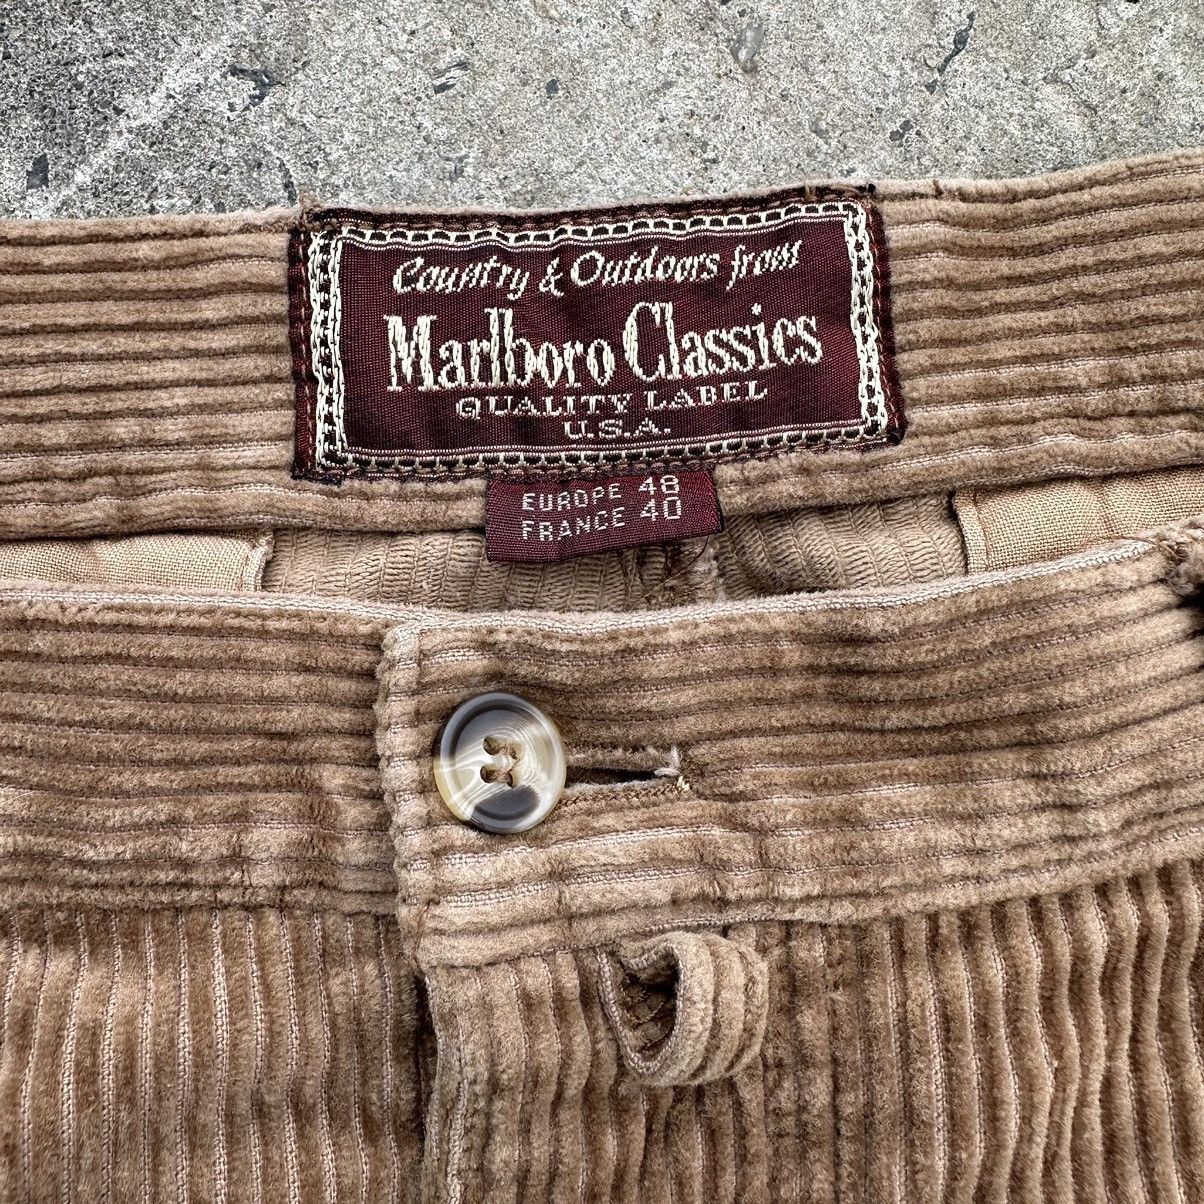 Vintage Vintage Corduroy Pants Marlboro Classic velveteen 90s Size US 32 / EU 48 - 11 Thumbnail